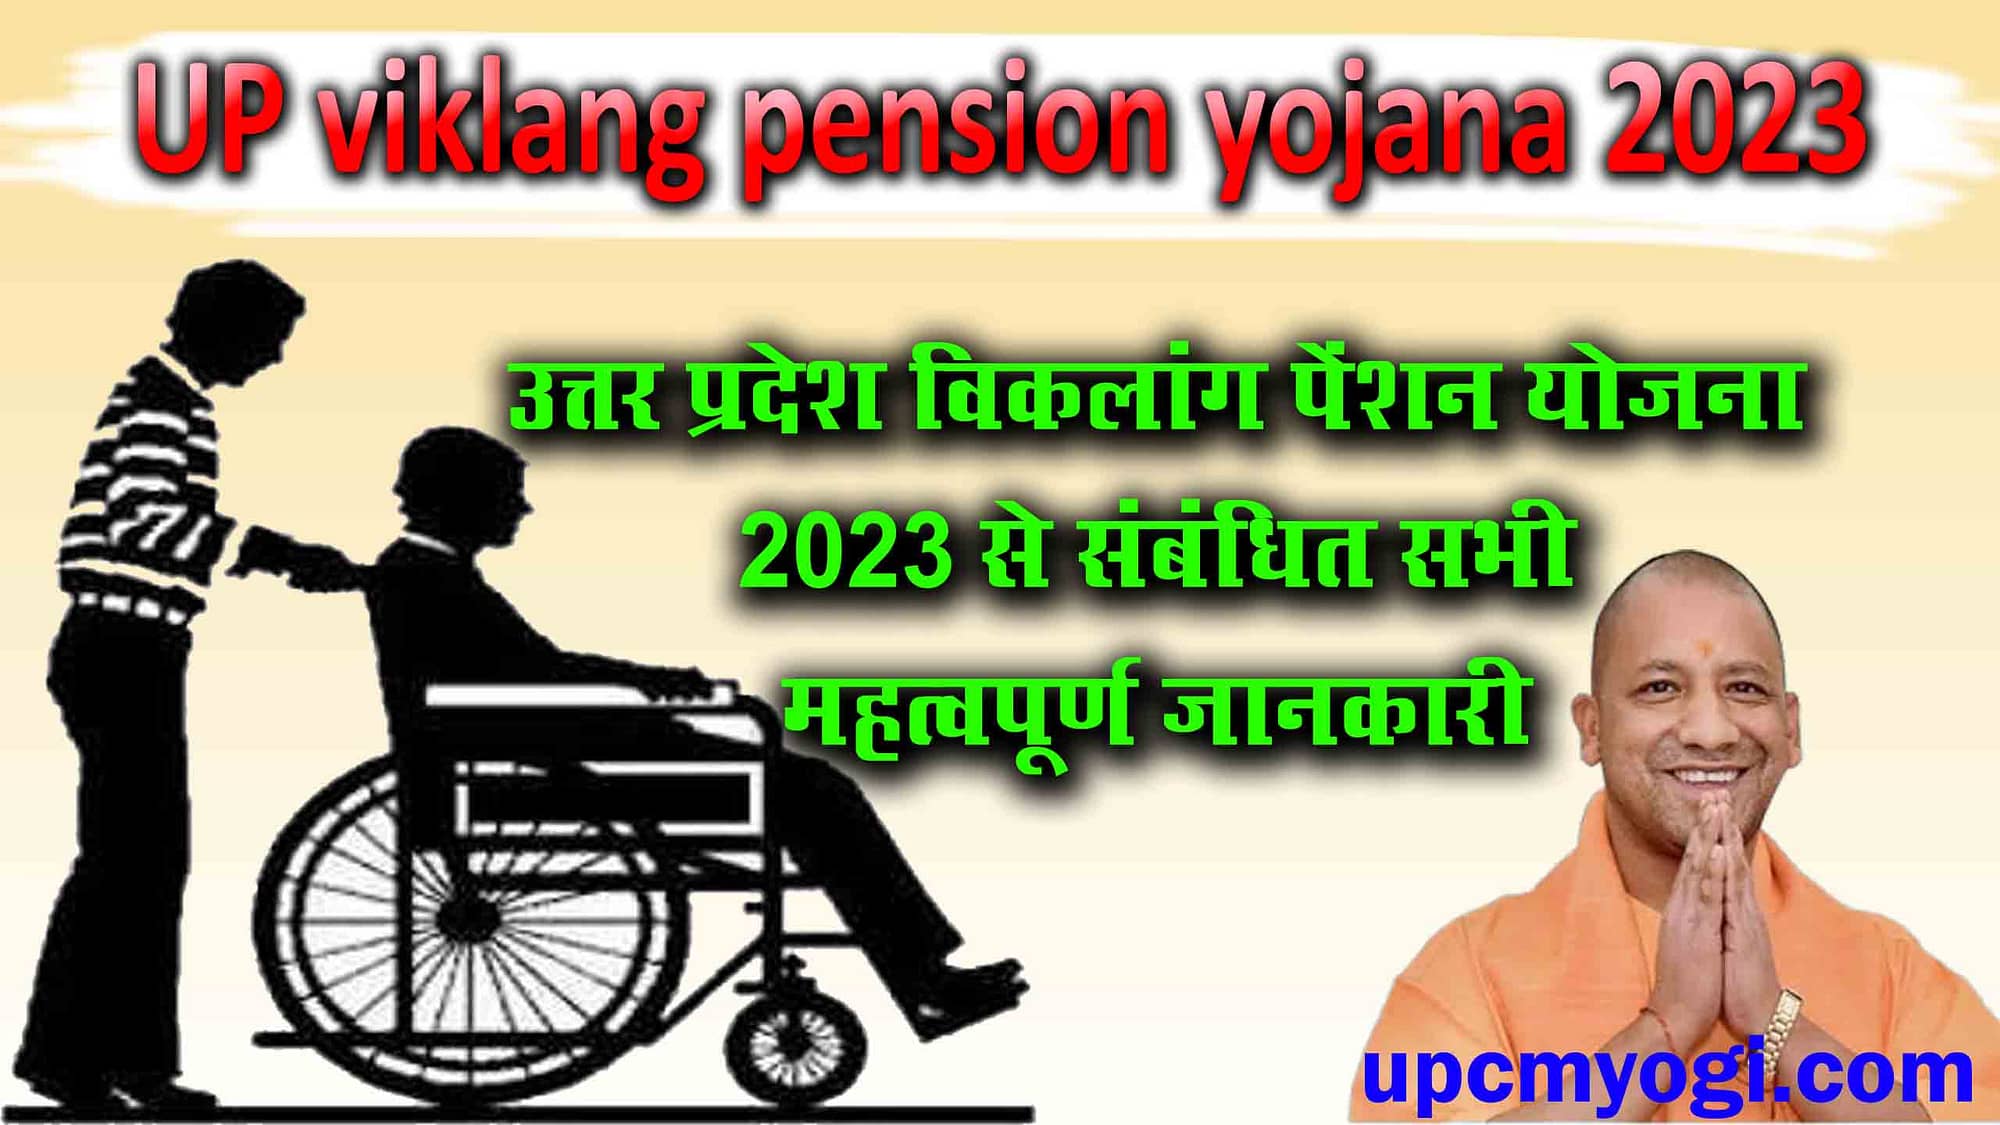 UP viklang pension yojana apply 2023 online